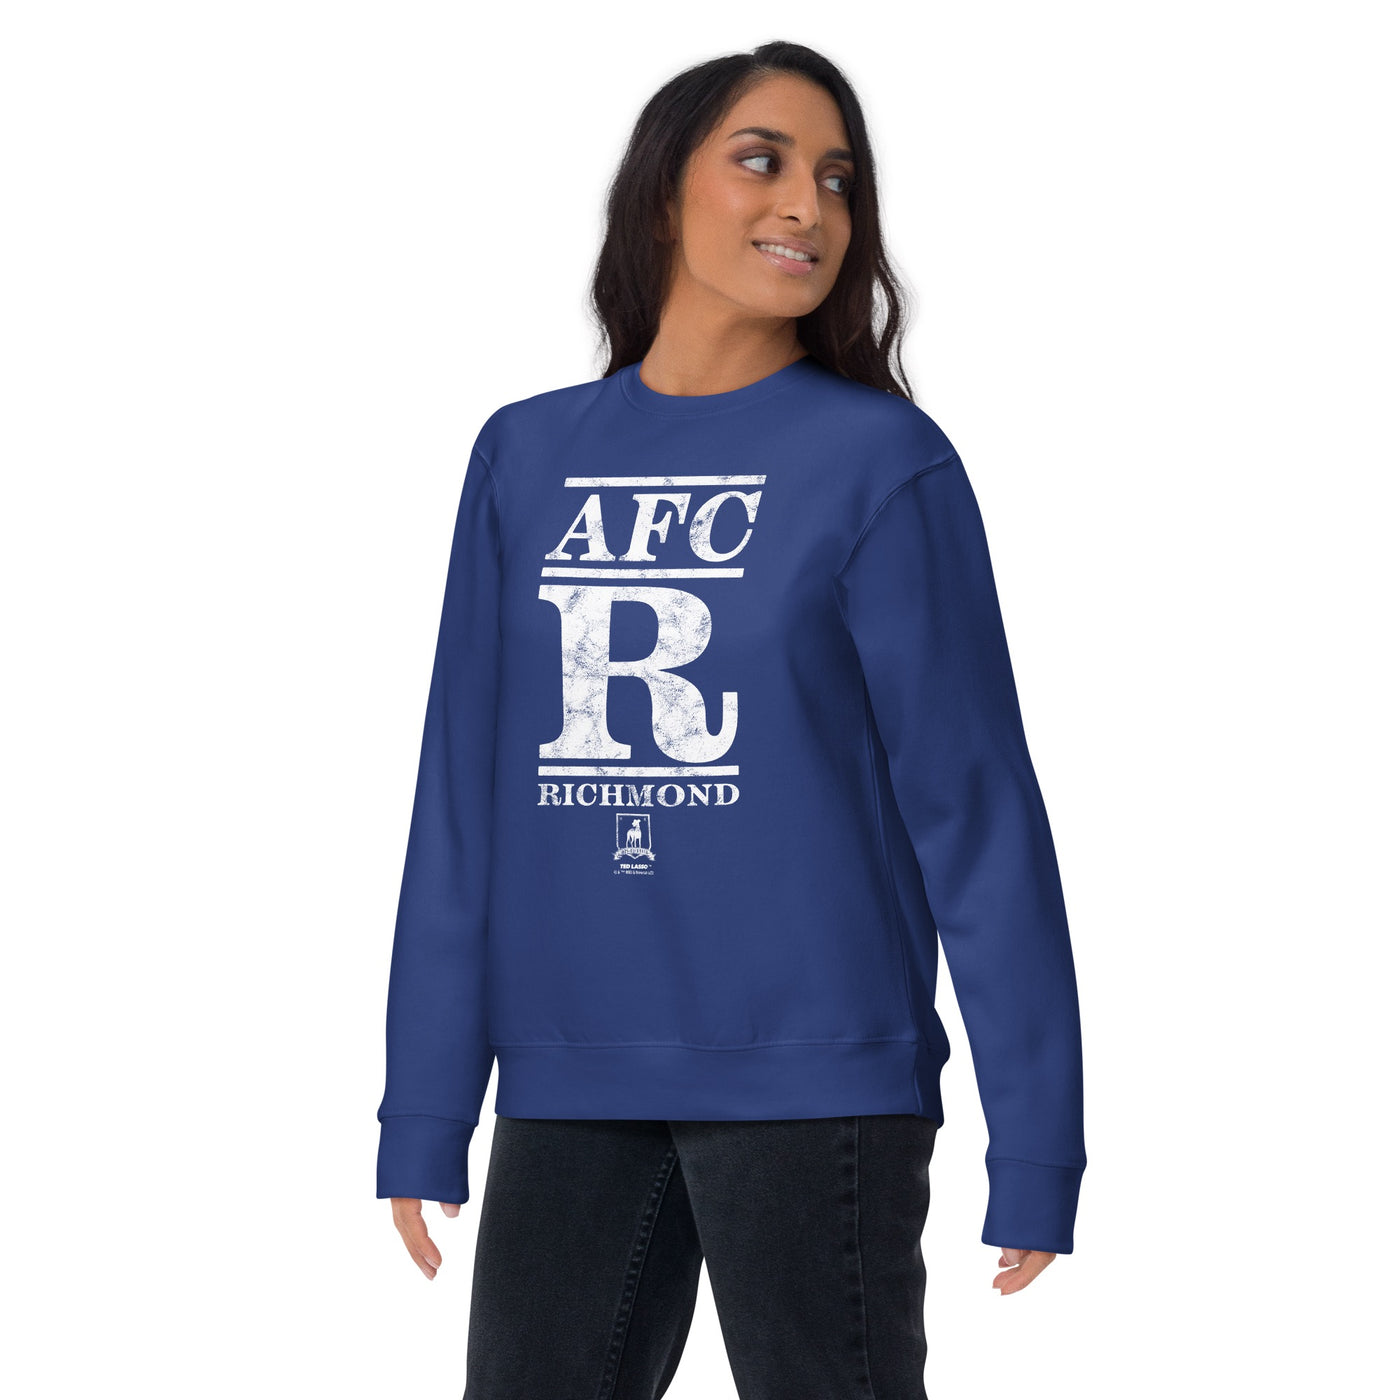 Ted Lasso A.F.C. Richmond Big R Fleece Crewneck Sweatshirt